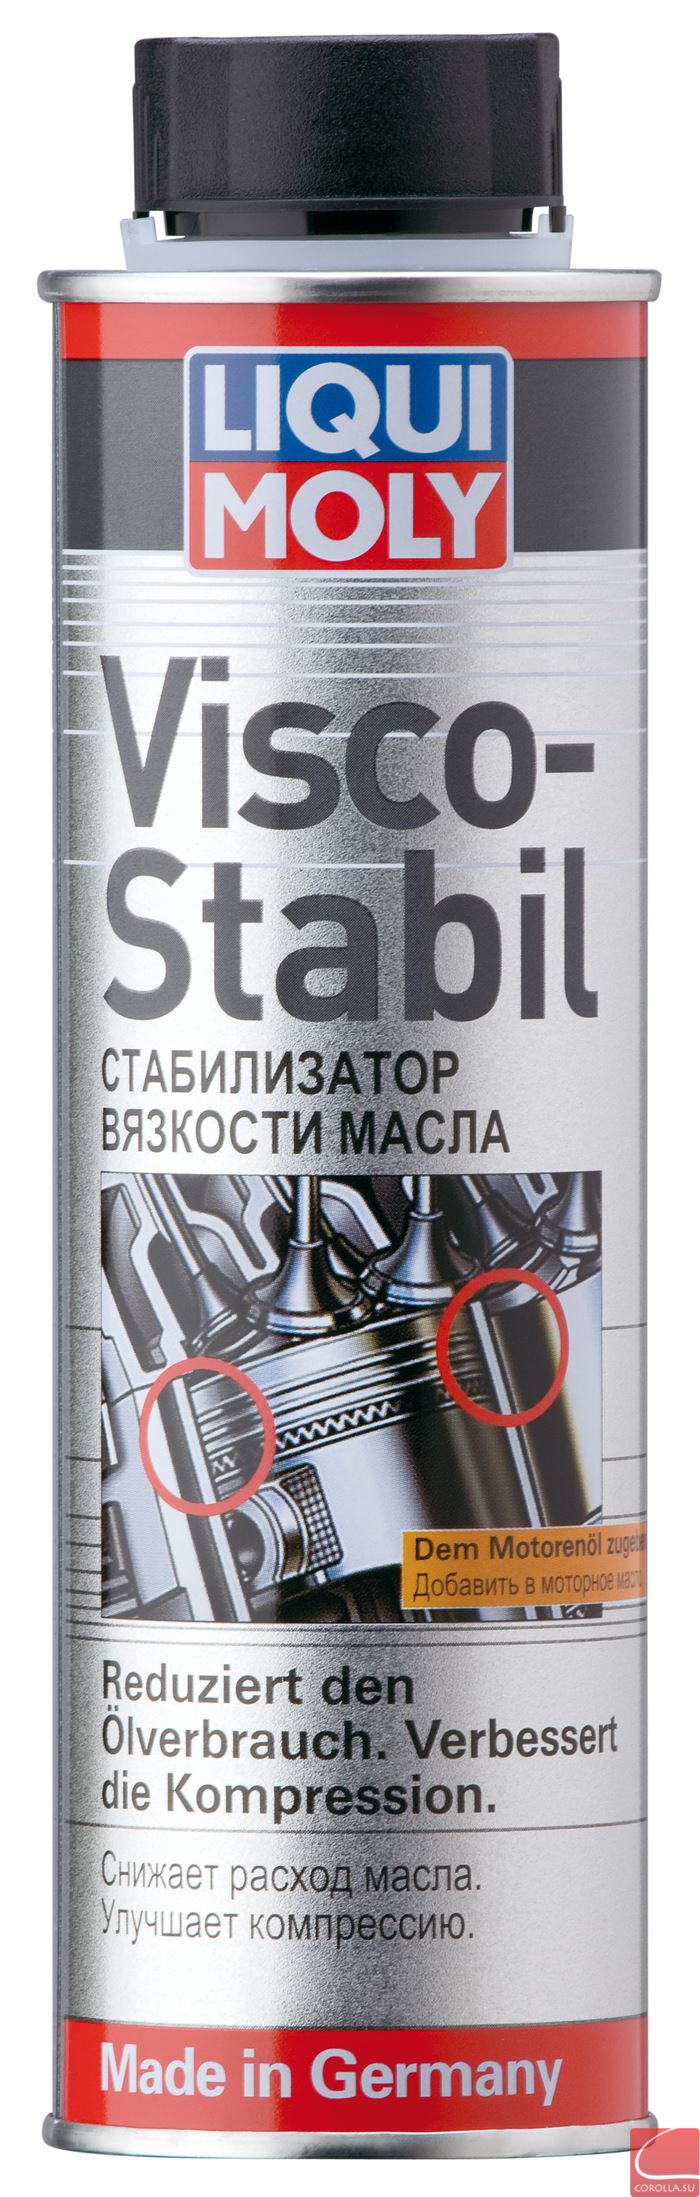 Стабилизатор вязкости Visco-Stabil